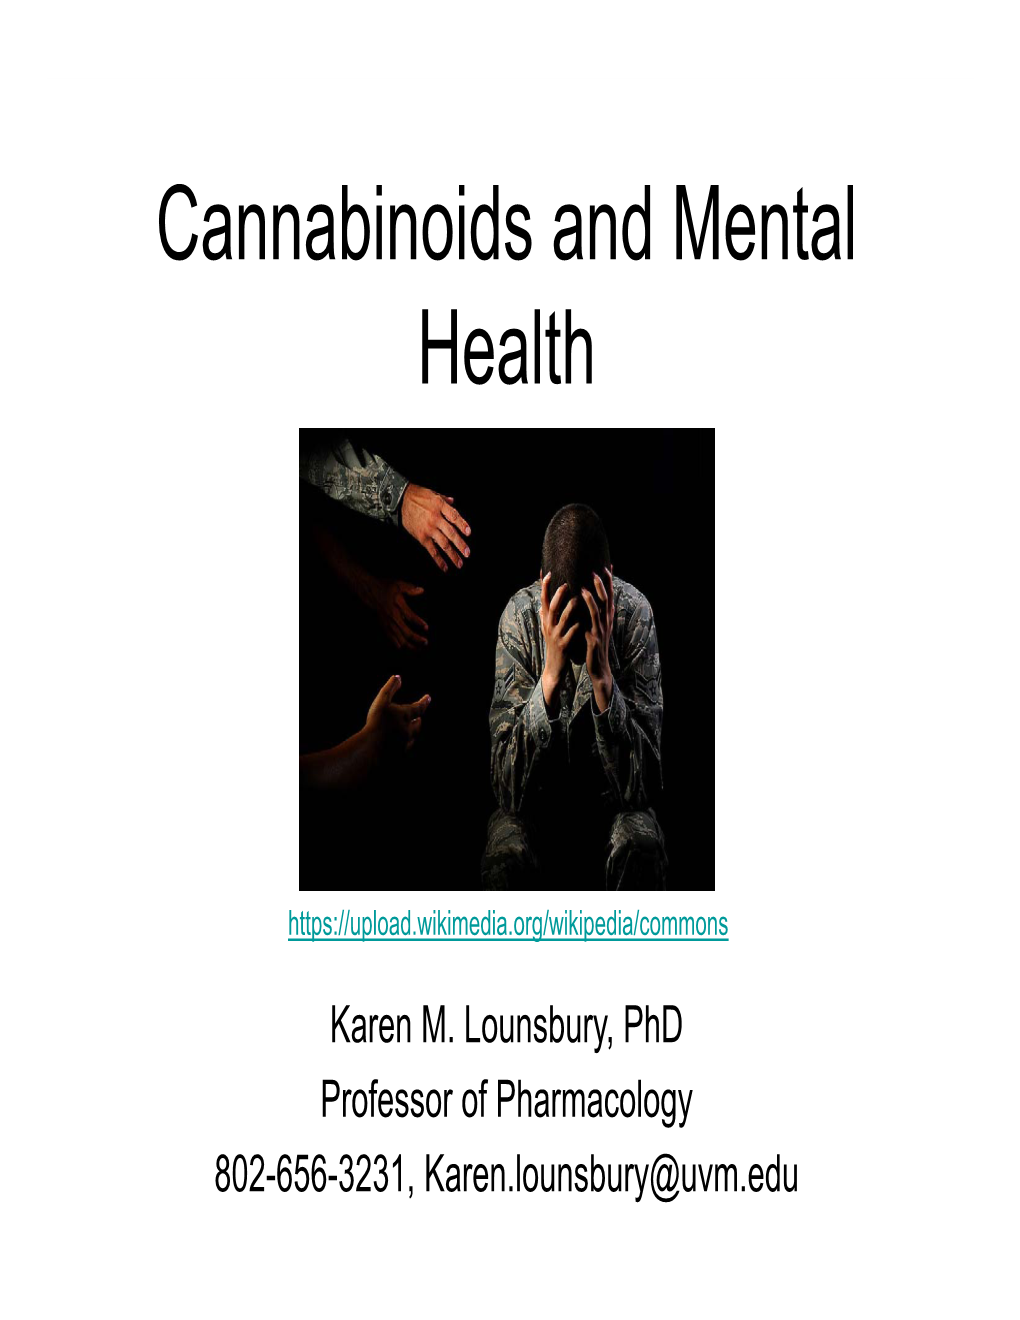 Cannabinoids and Mental Health